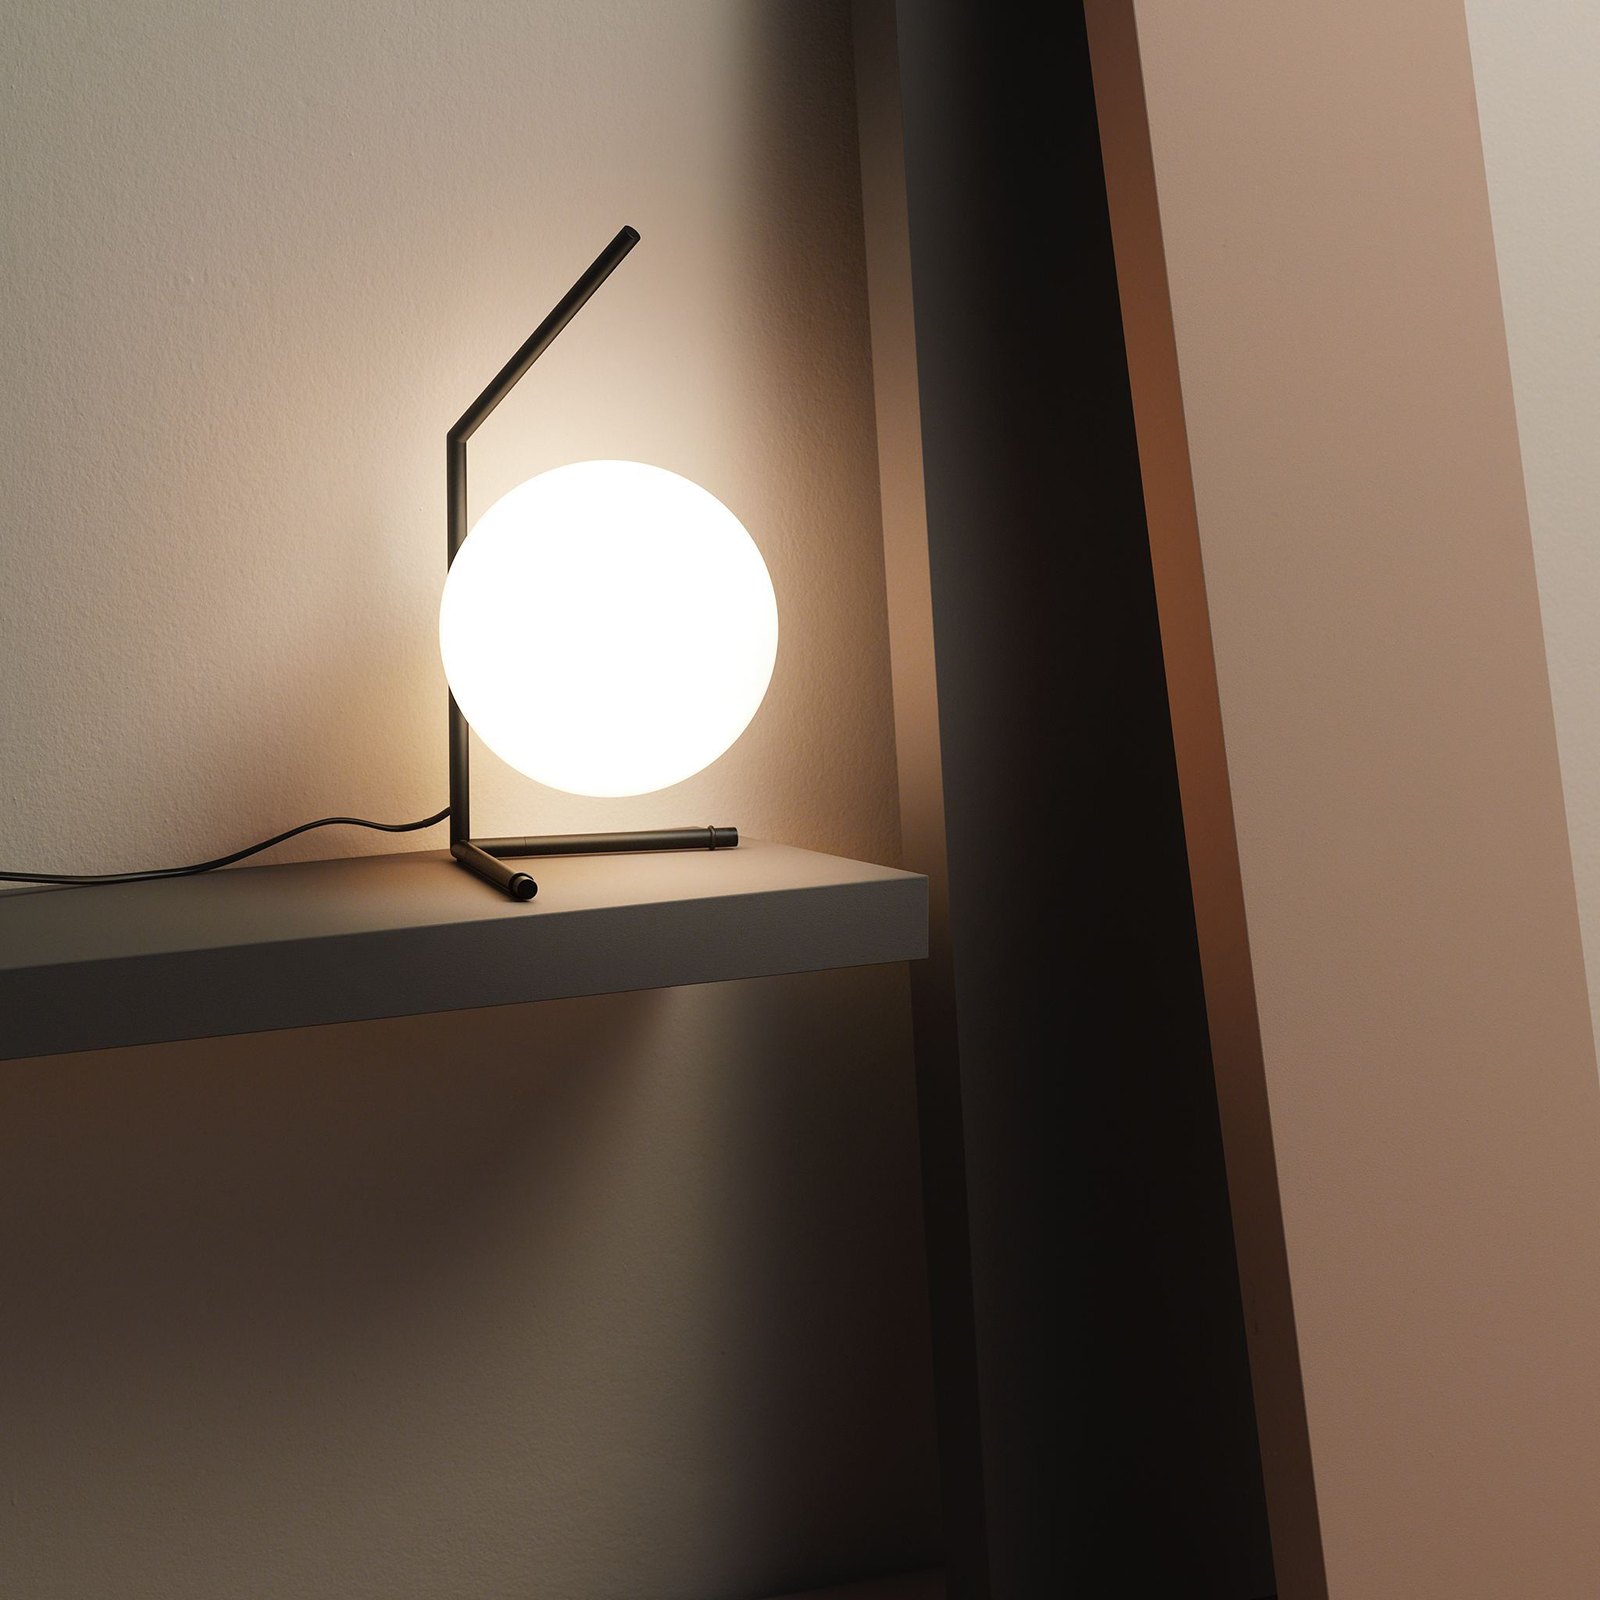 Flos IC Lights T1 Table Lamp in Low 20cm 恆星系列桌燈小尺寸- 低版